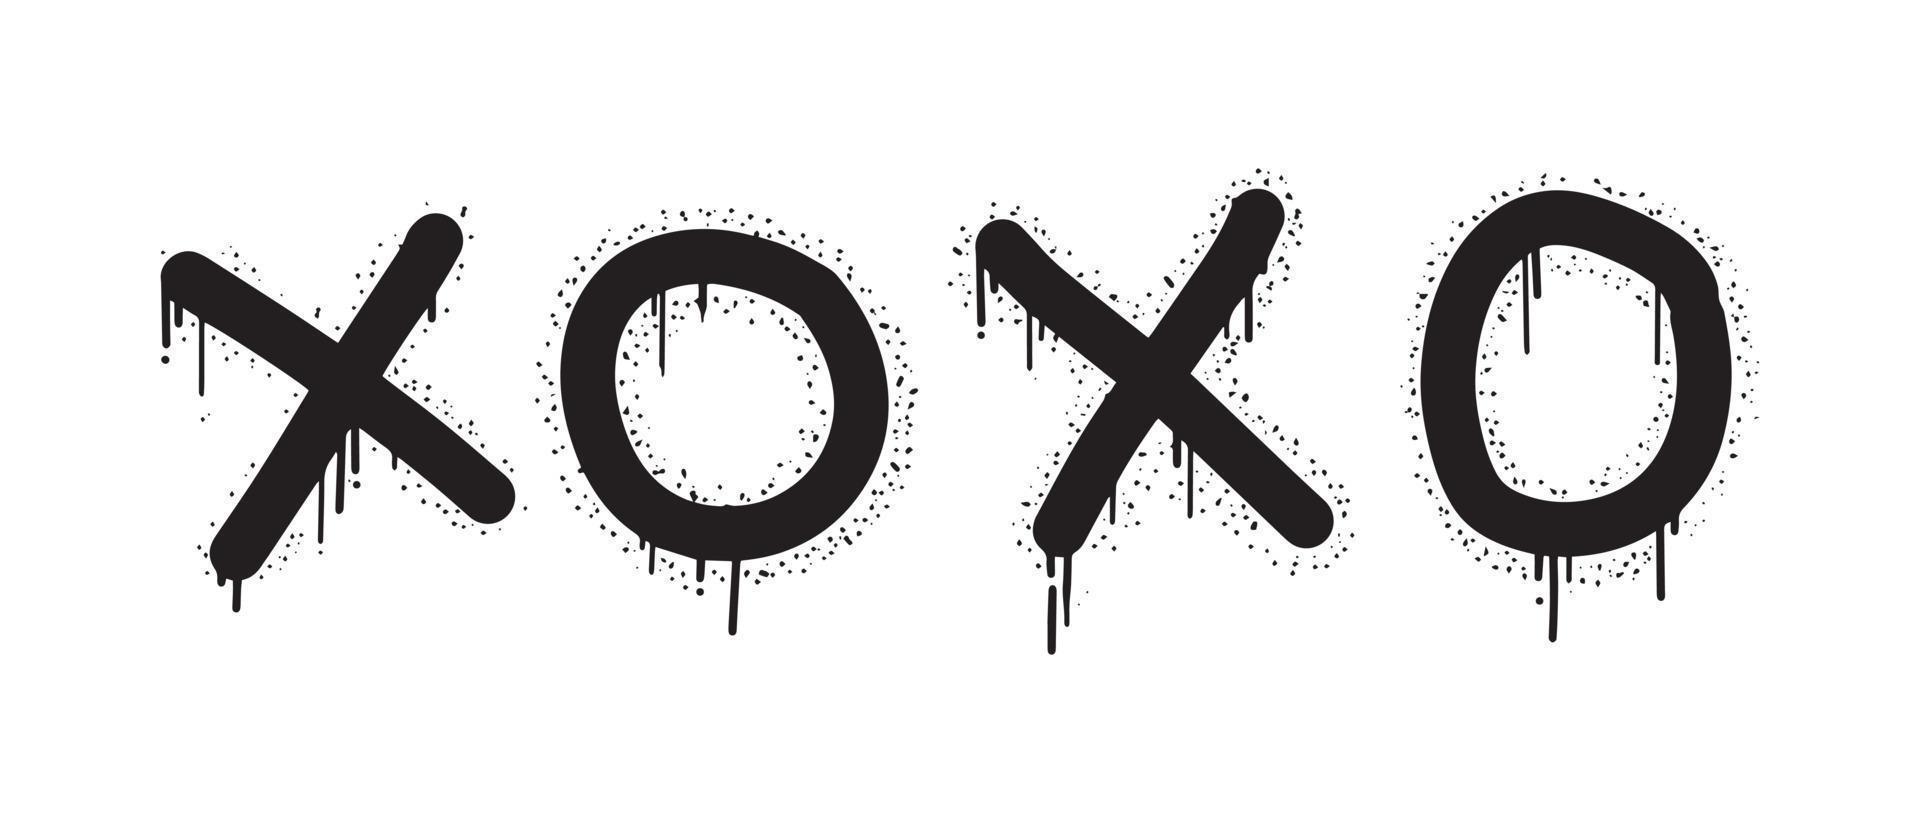 graffiti XOXO sign sprayed in black over white, vector eps 10.